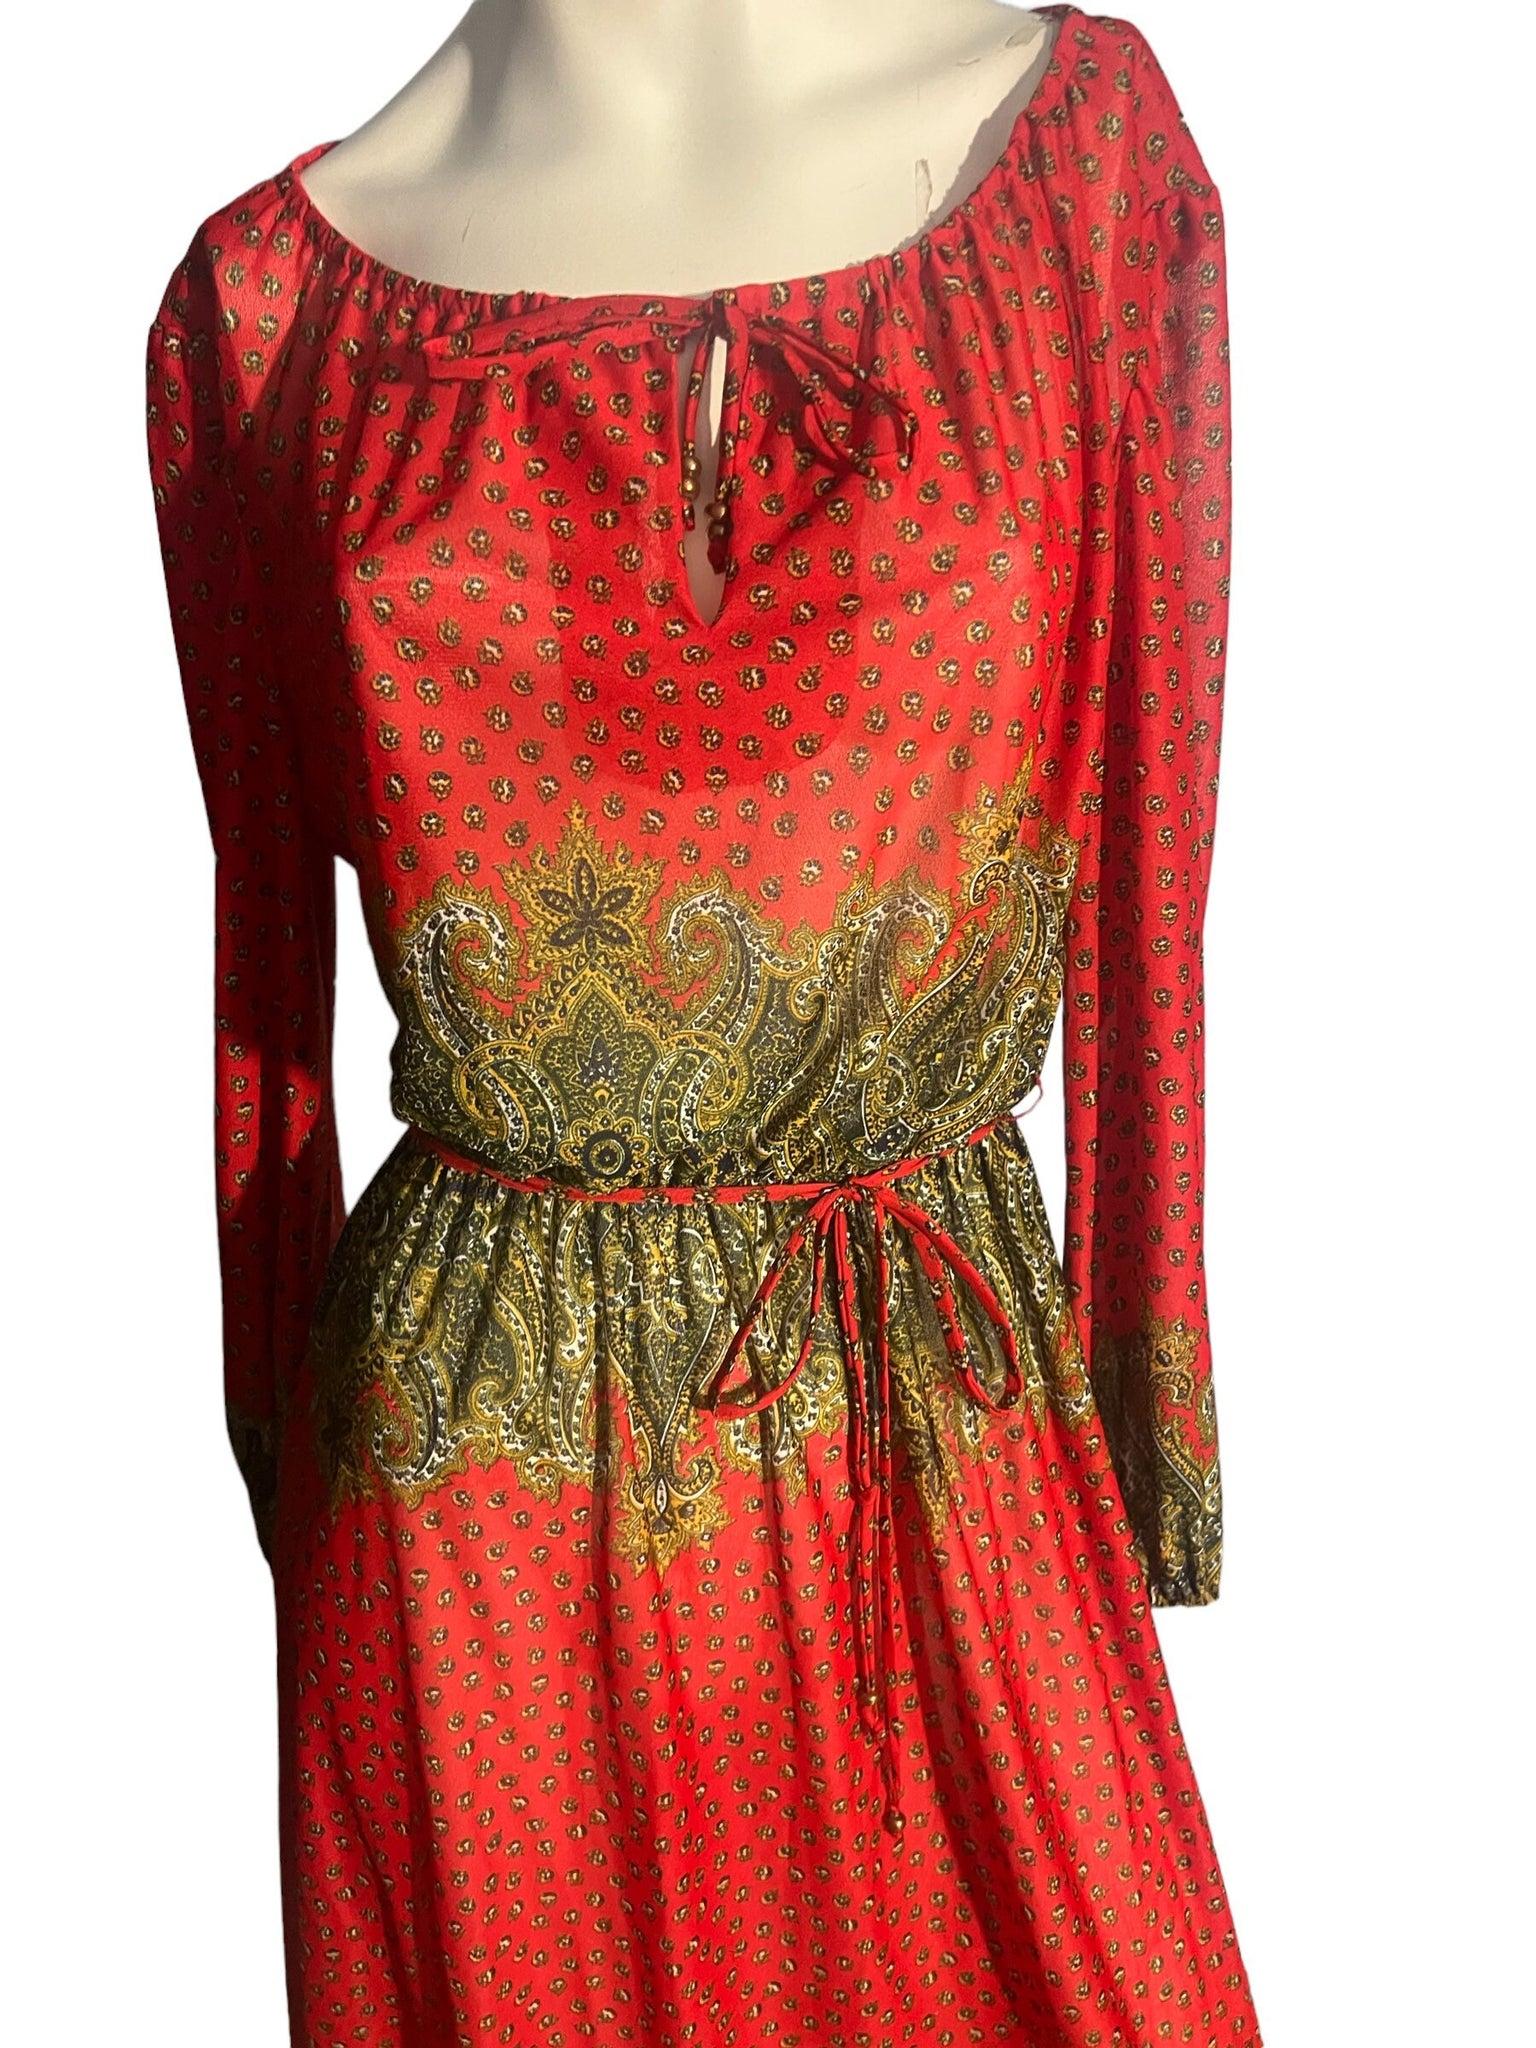 Vintage 70's paisley dress Amy Deb sz 12 M